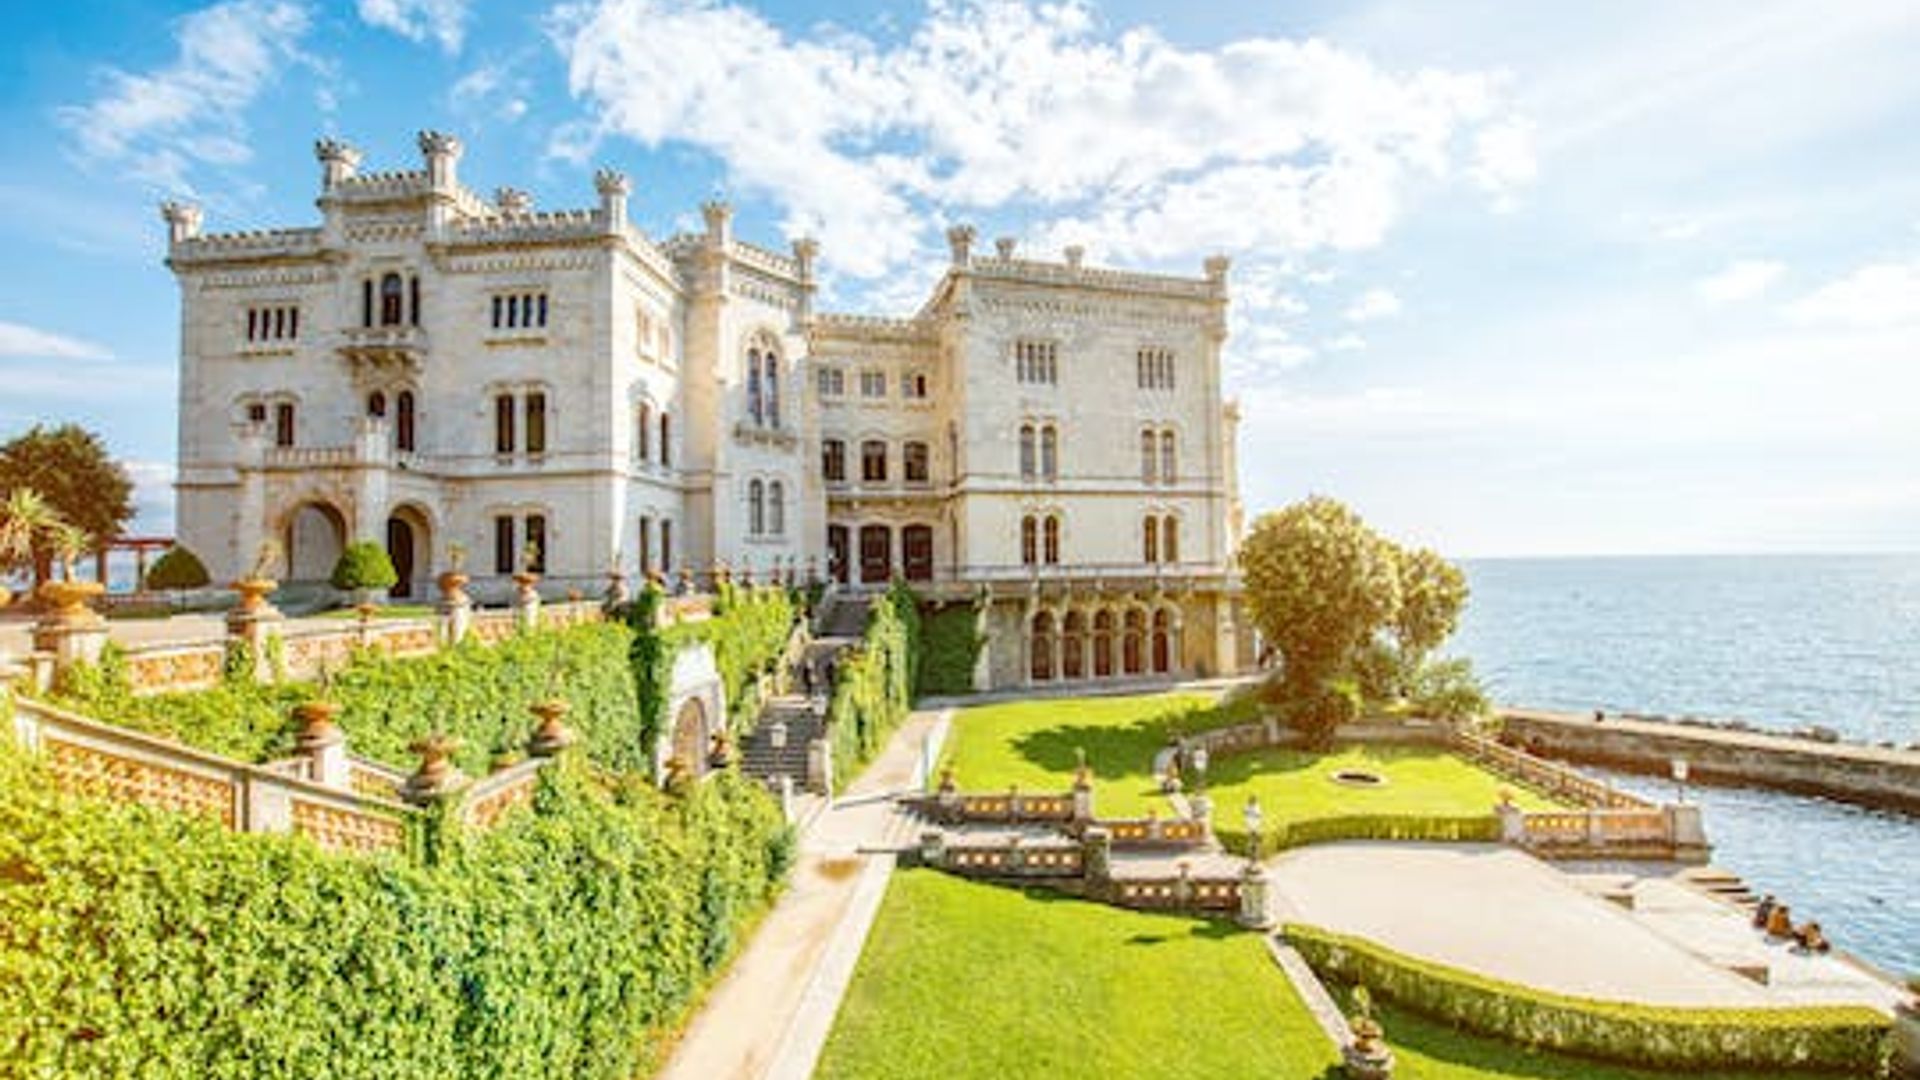 Tickets to Miramare Castle in Trieste